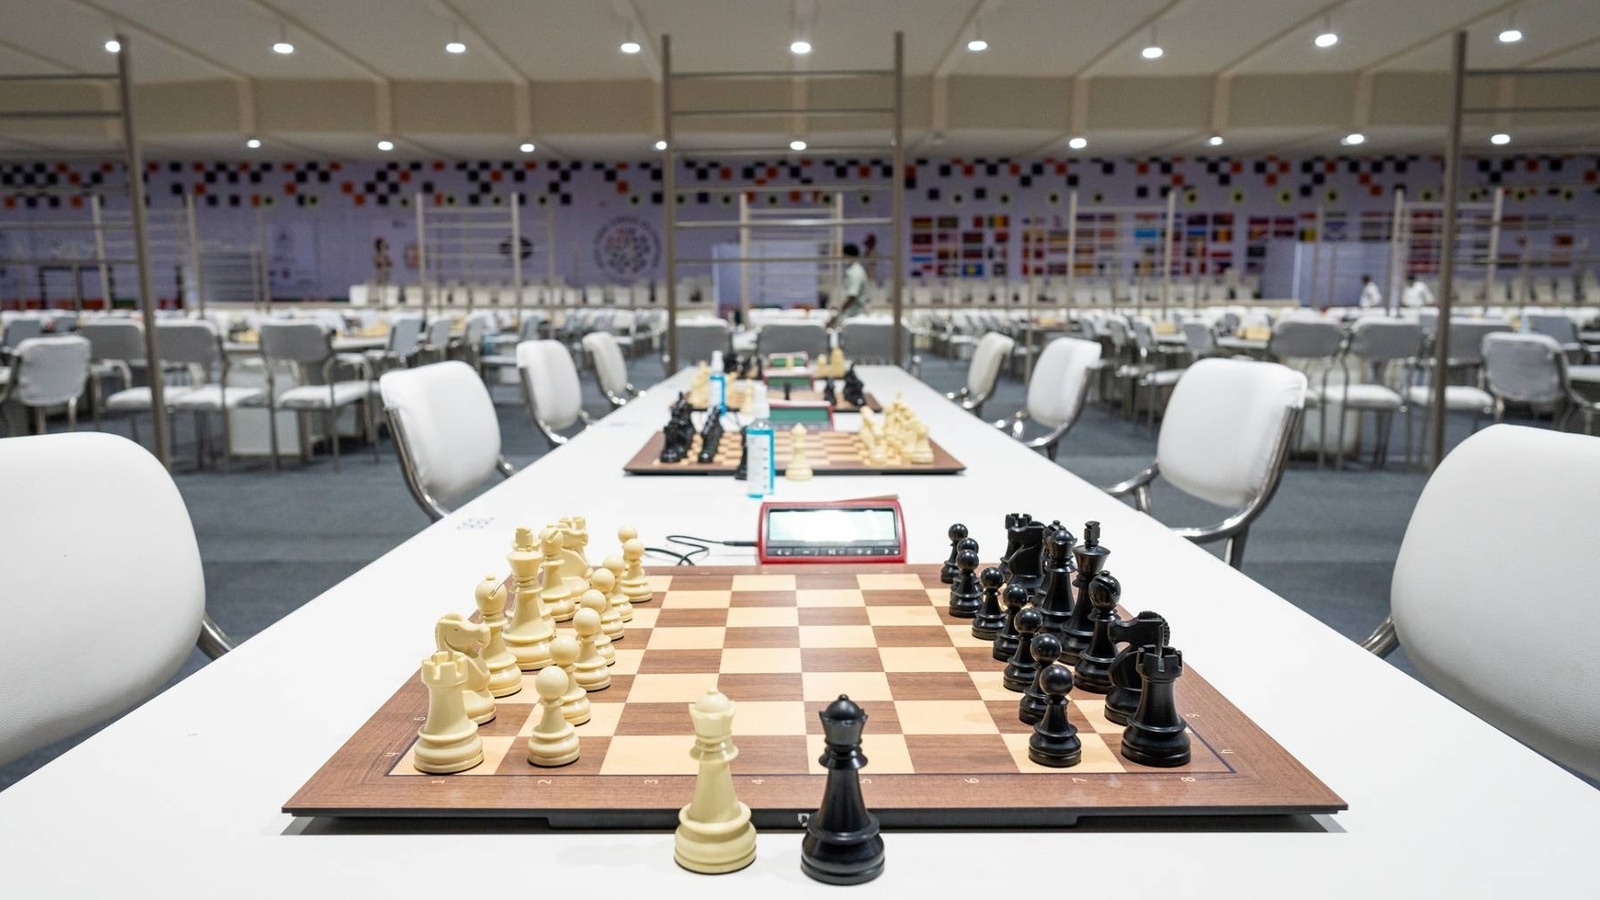 Carlsen heads Norwegian team in Chennai Olympiad